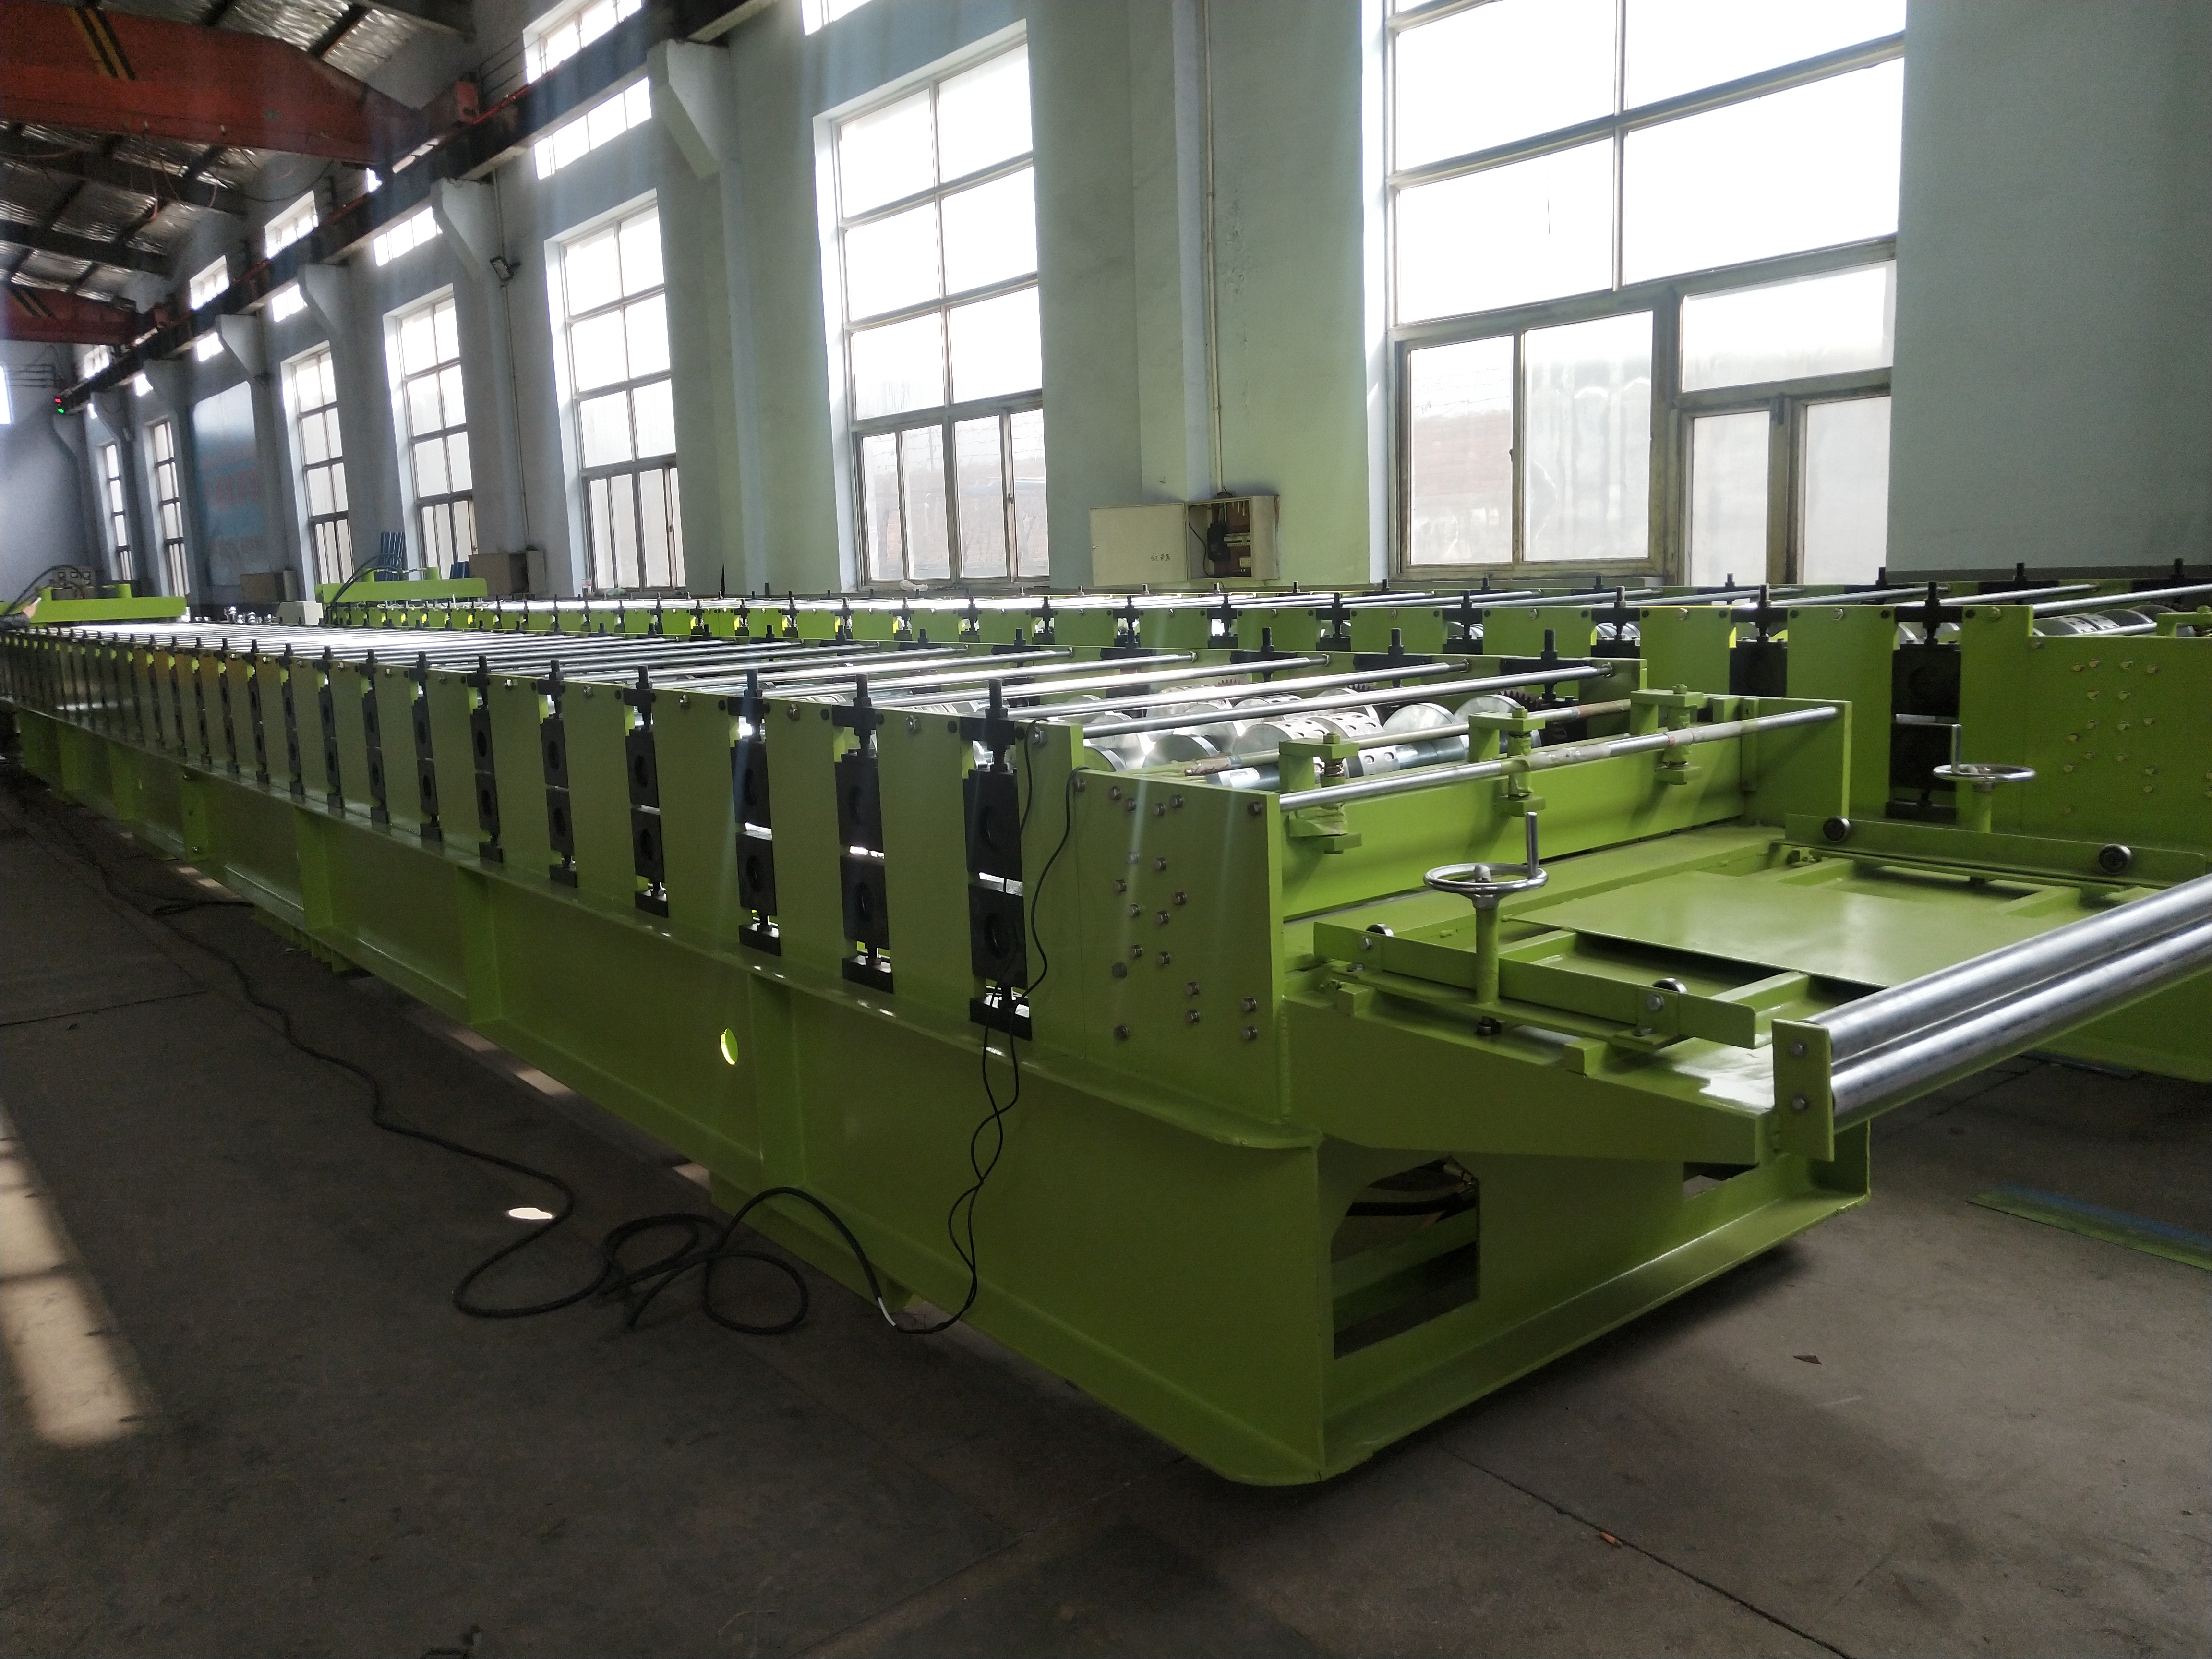 Floor deck roll forming machine test for Burma customer